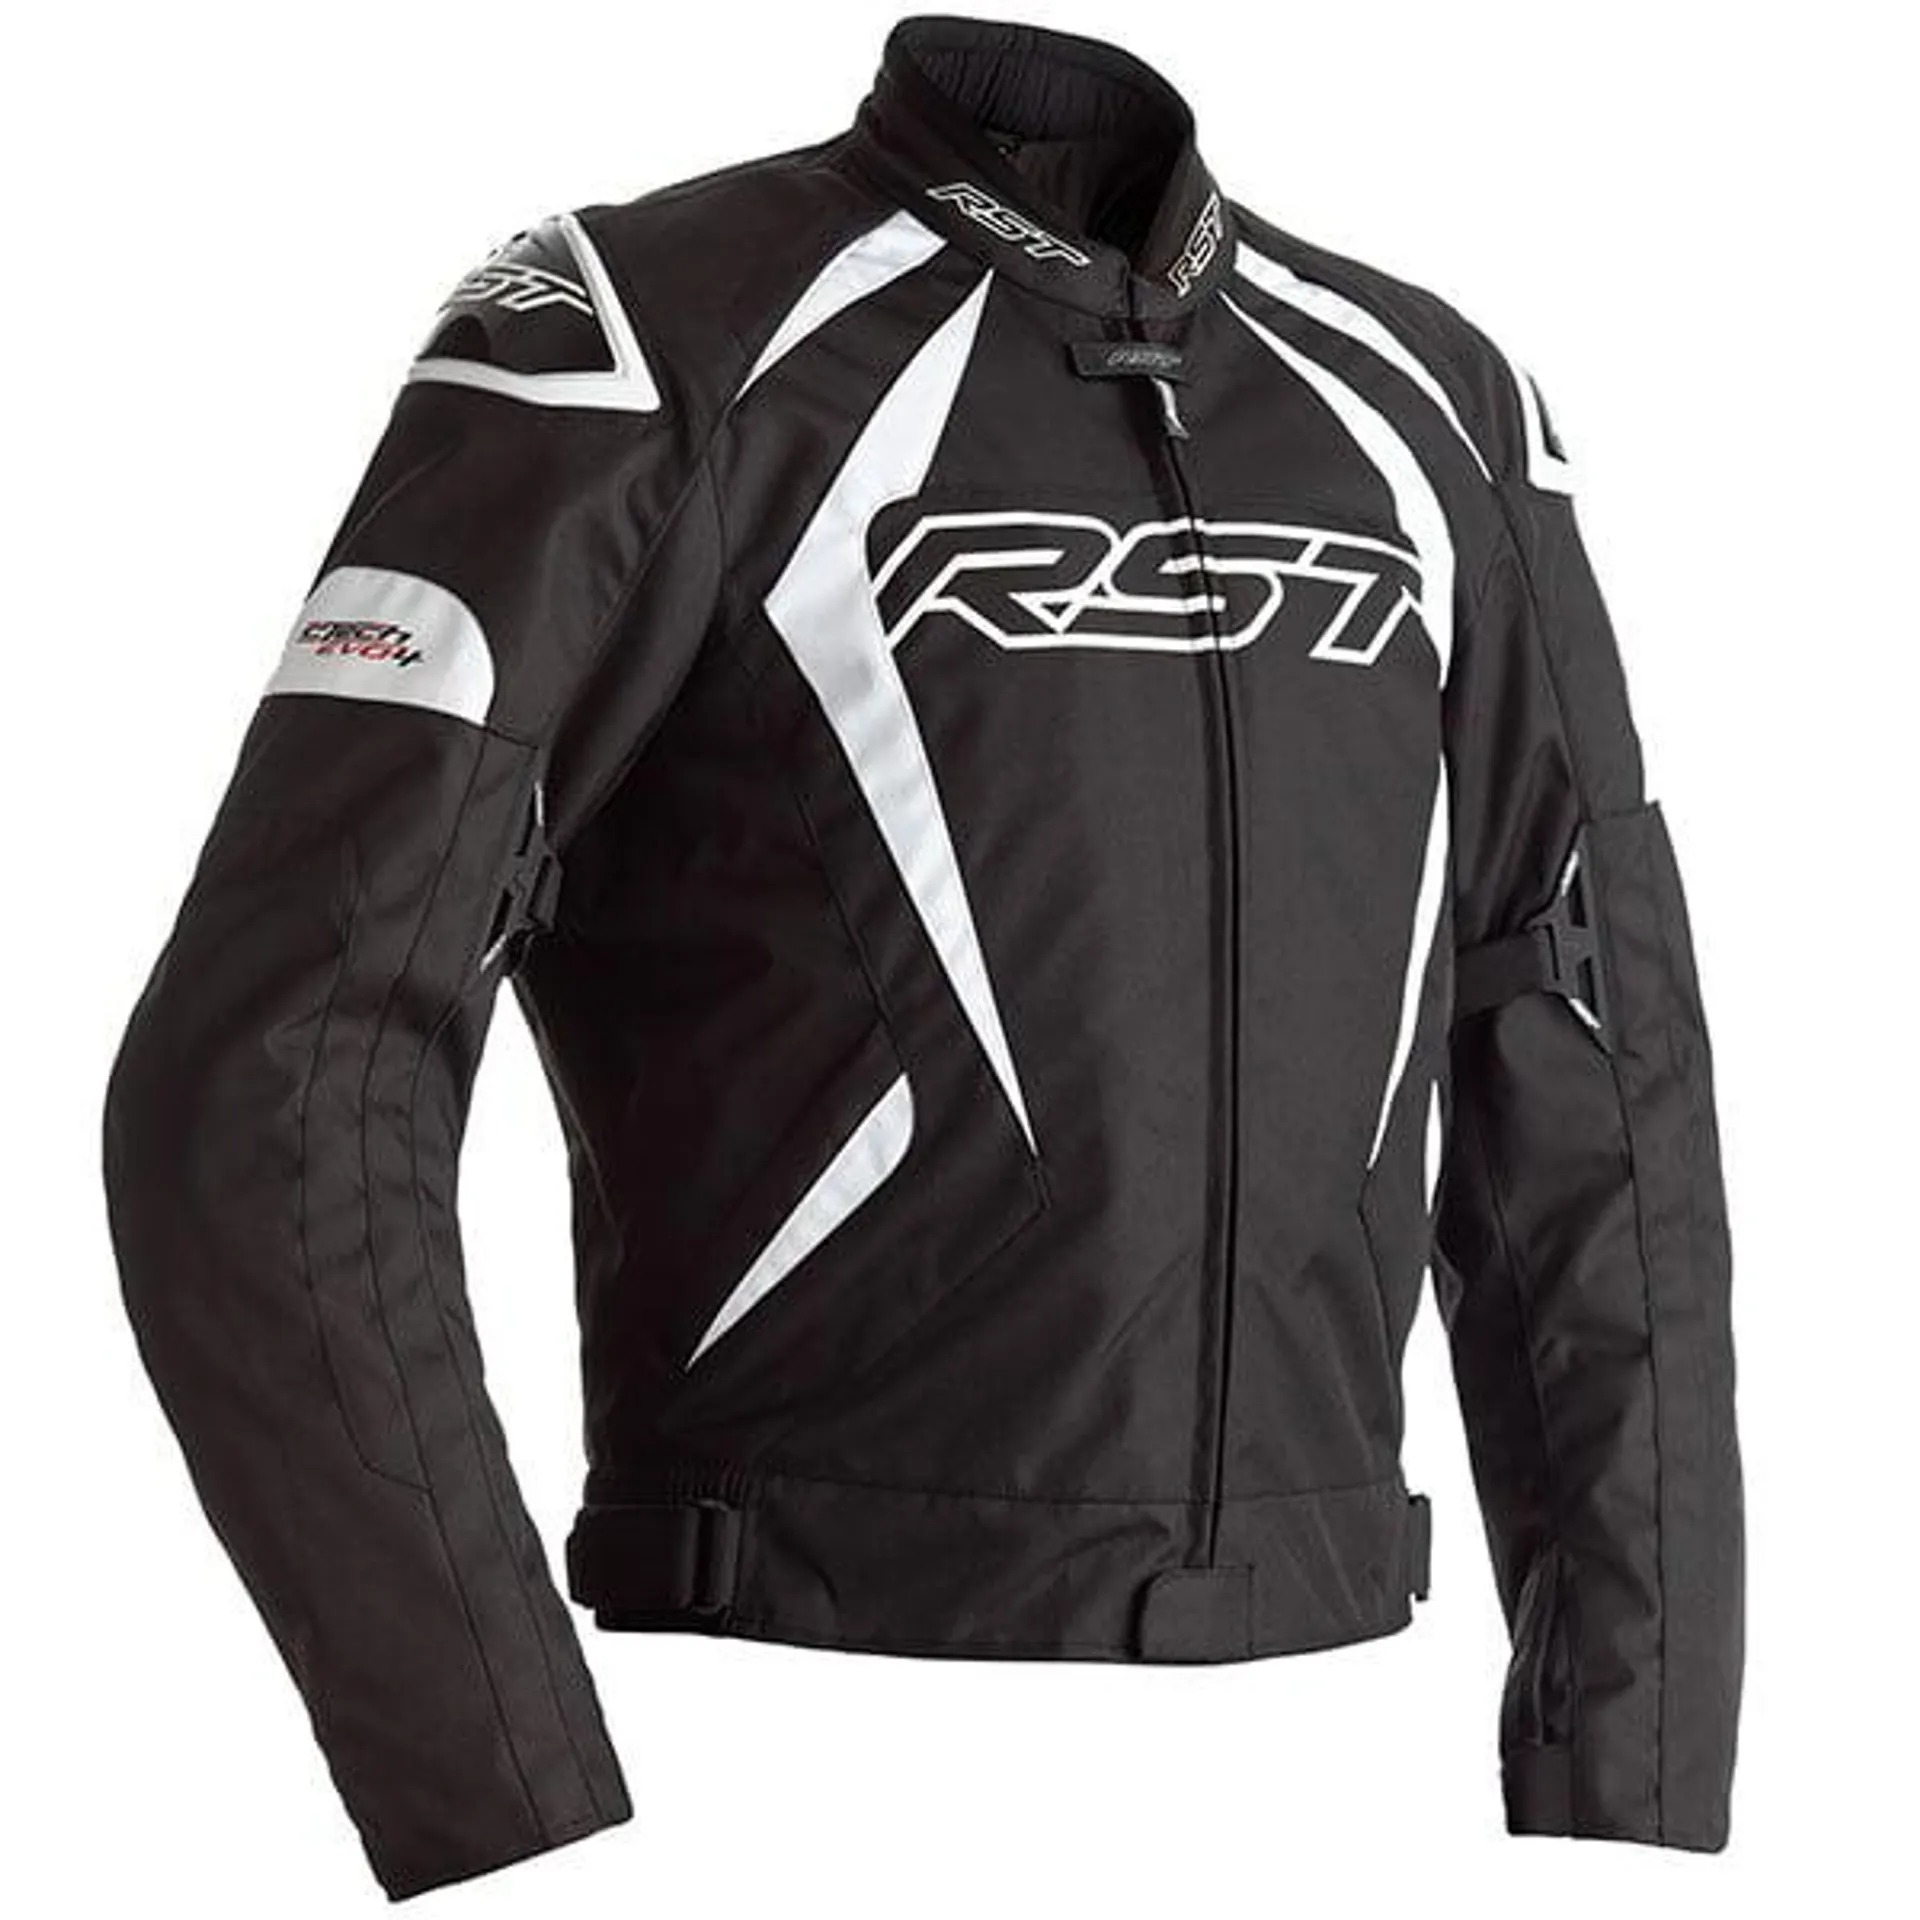 RST Tractech Evo 4 CE Textile Jacket - Black / White